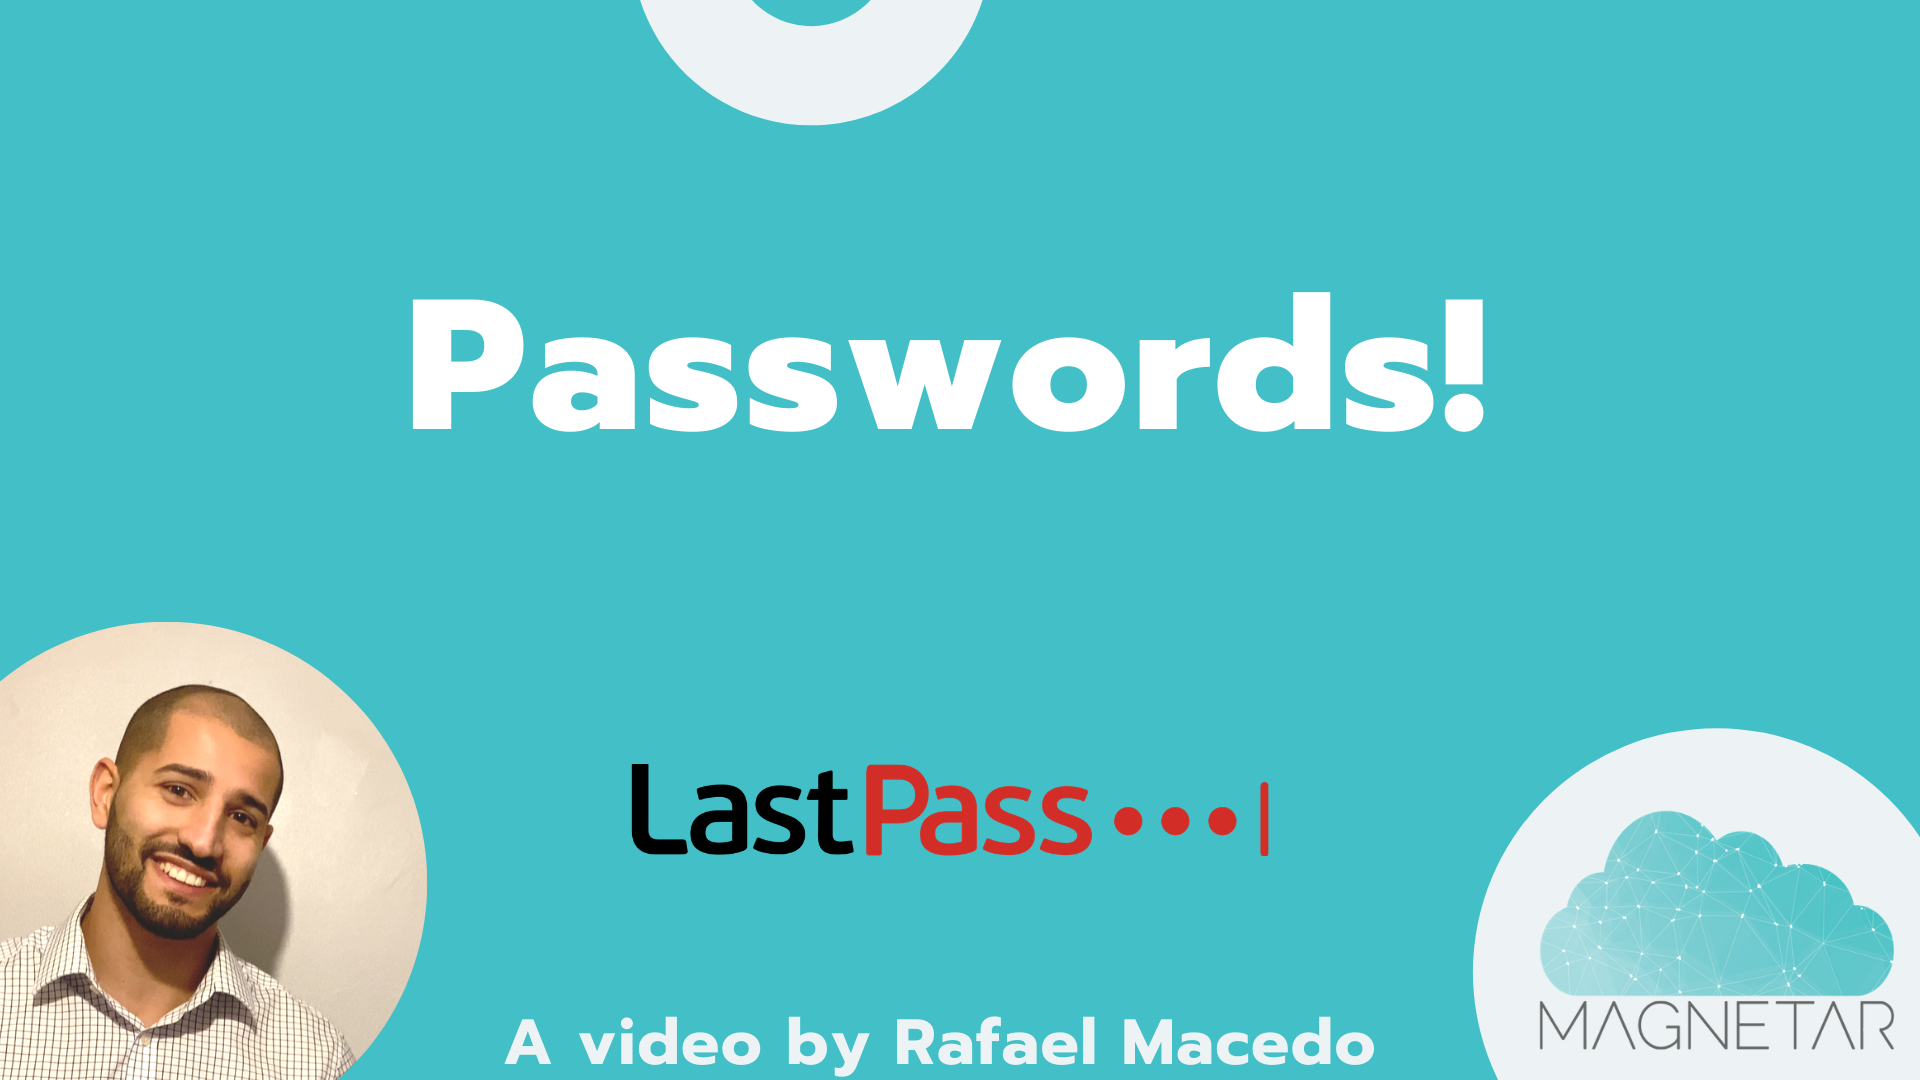 Video: The Password Problem